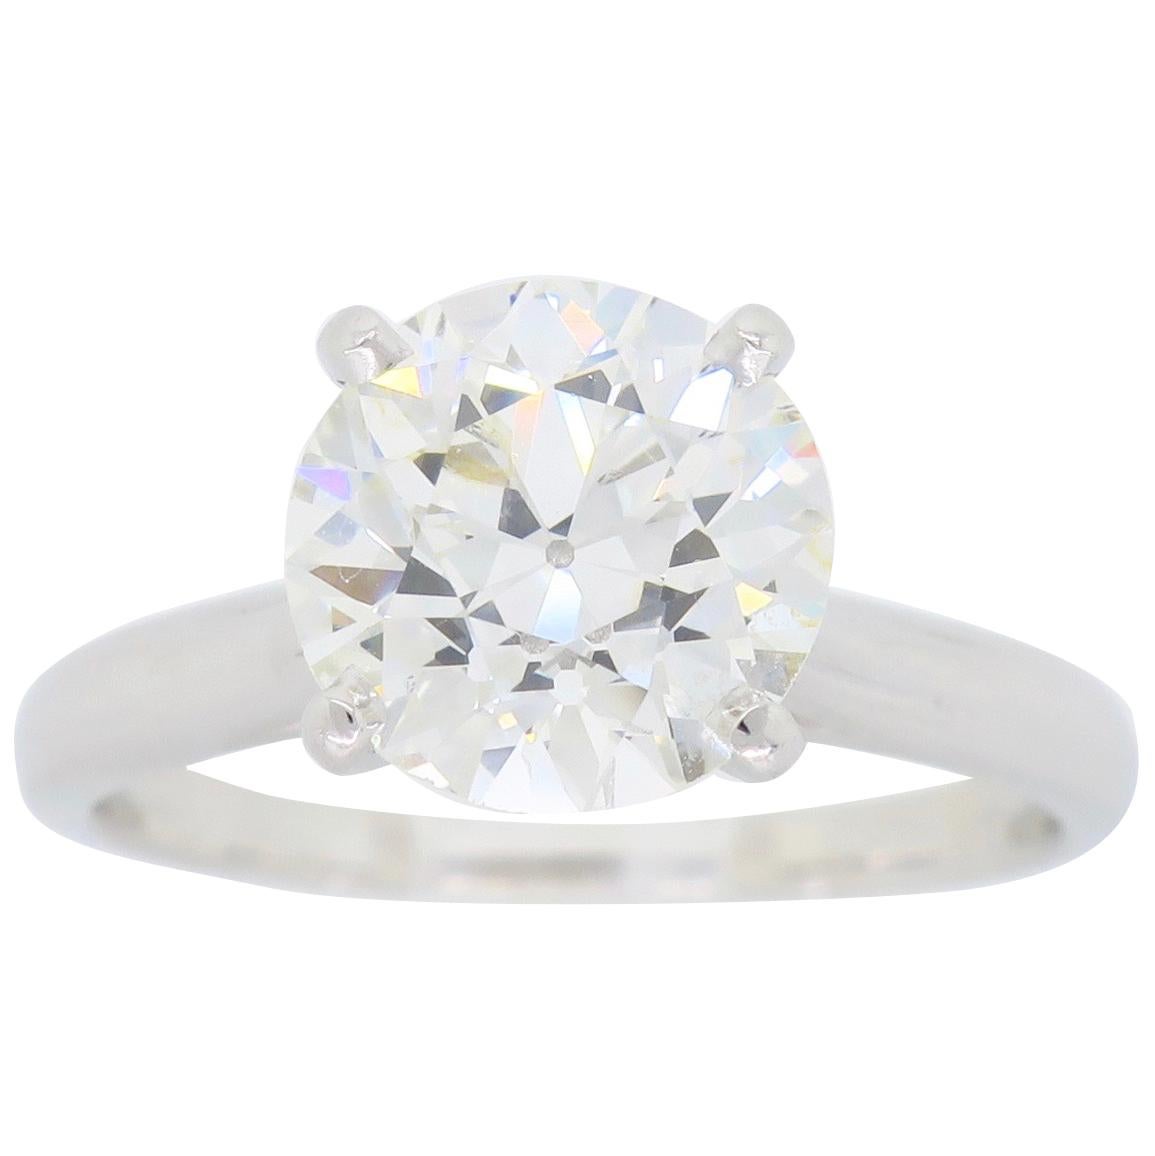 2.22 Carat Round Transitional Cut Diamond Engagement Ring